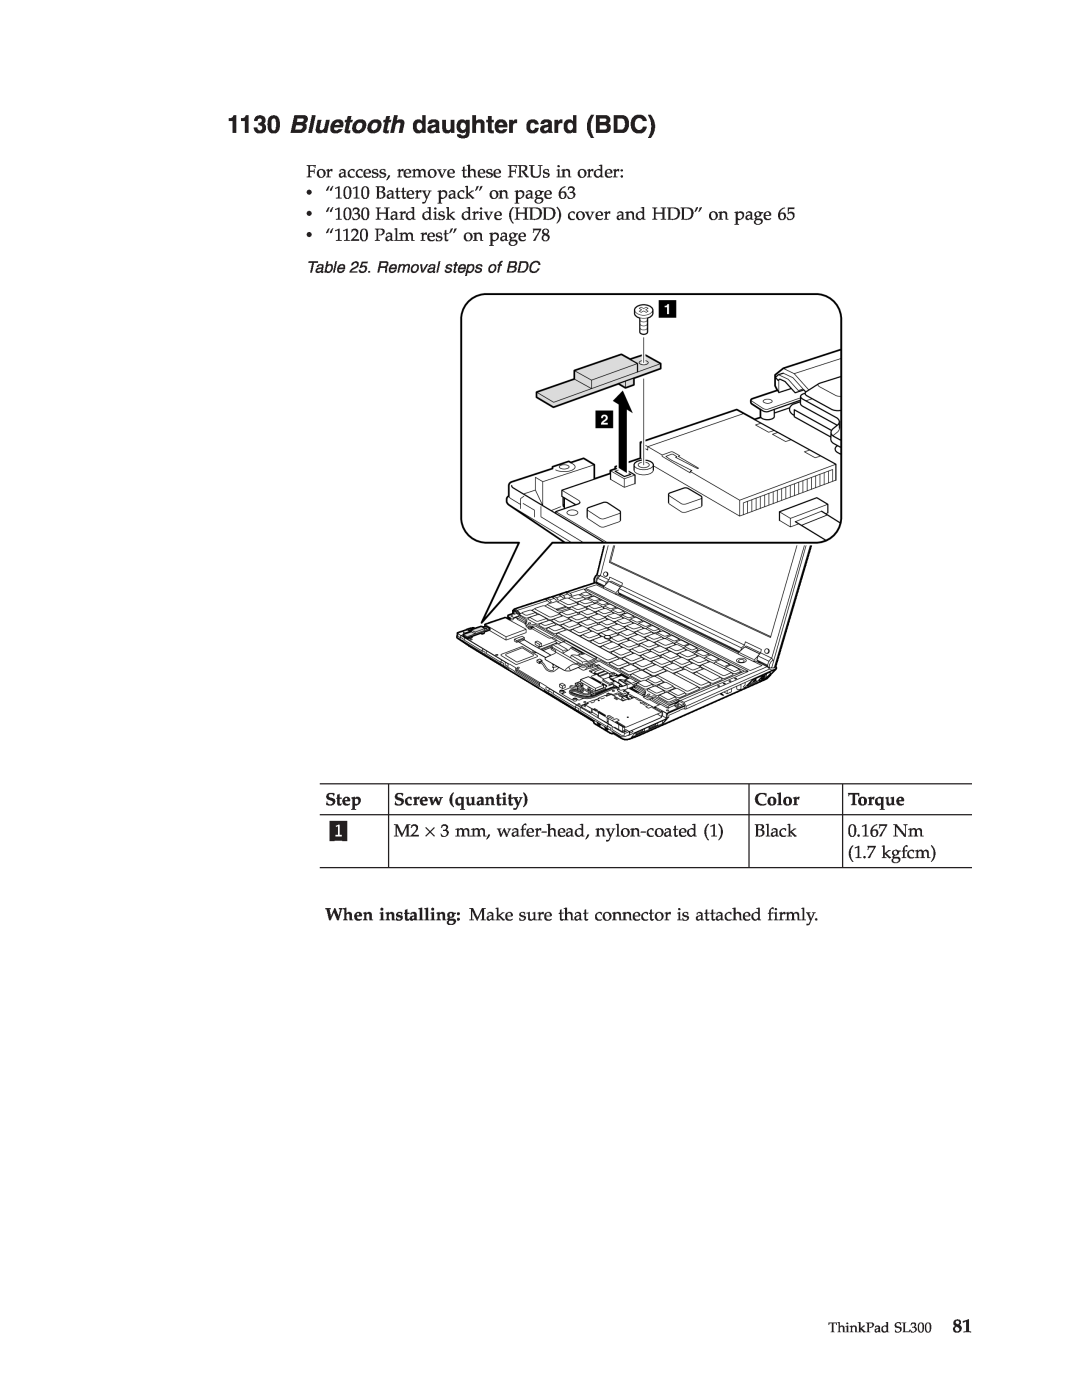 Lenovo manual Bluetooth daughter card BDC, Step, Screw quantity, Color, Torque, Removal steps of BDC, ThinkPad SL300 